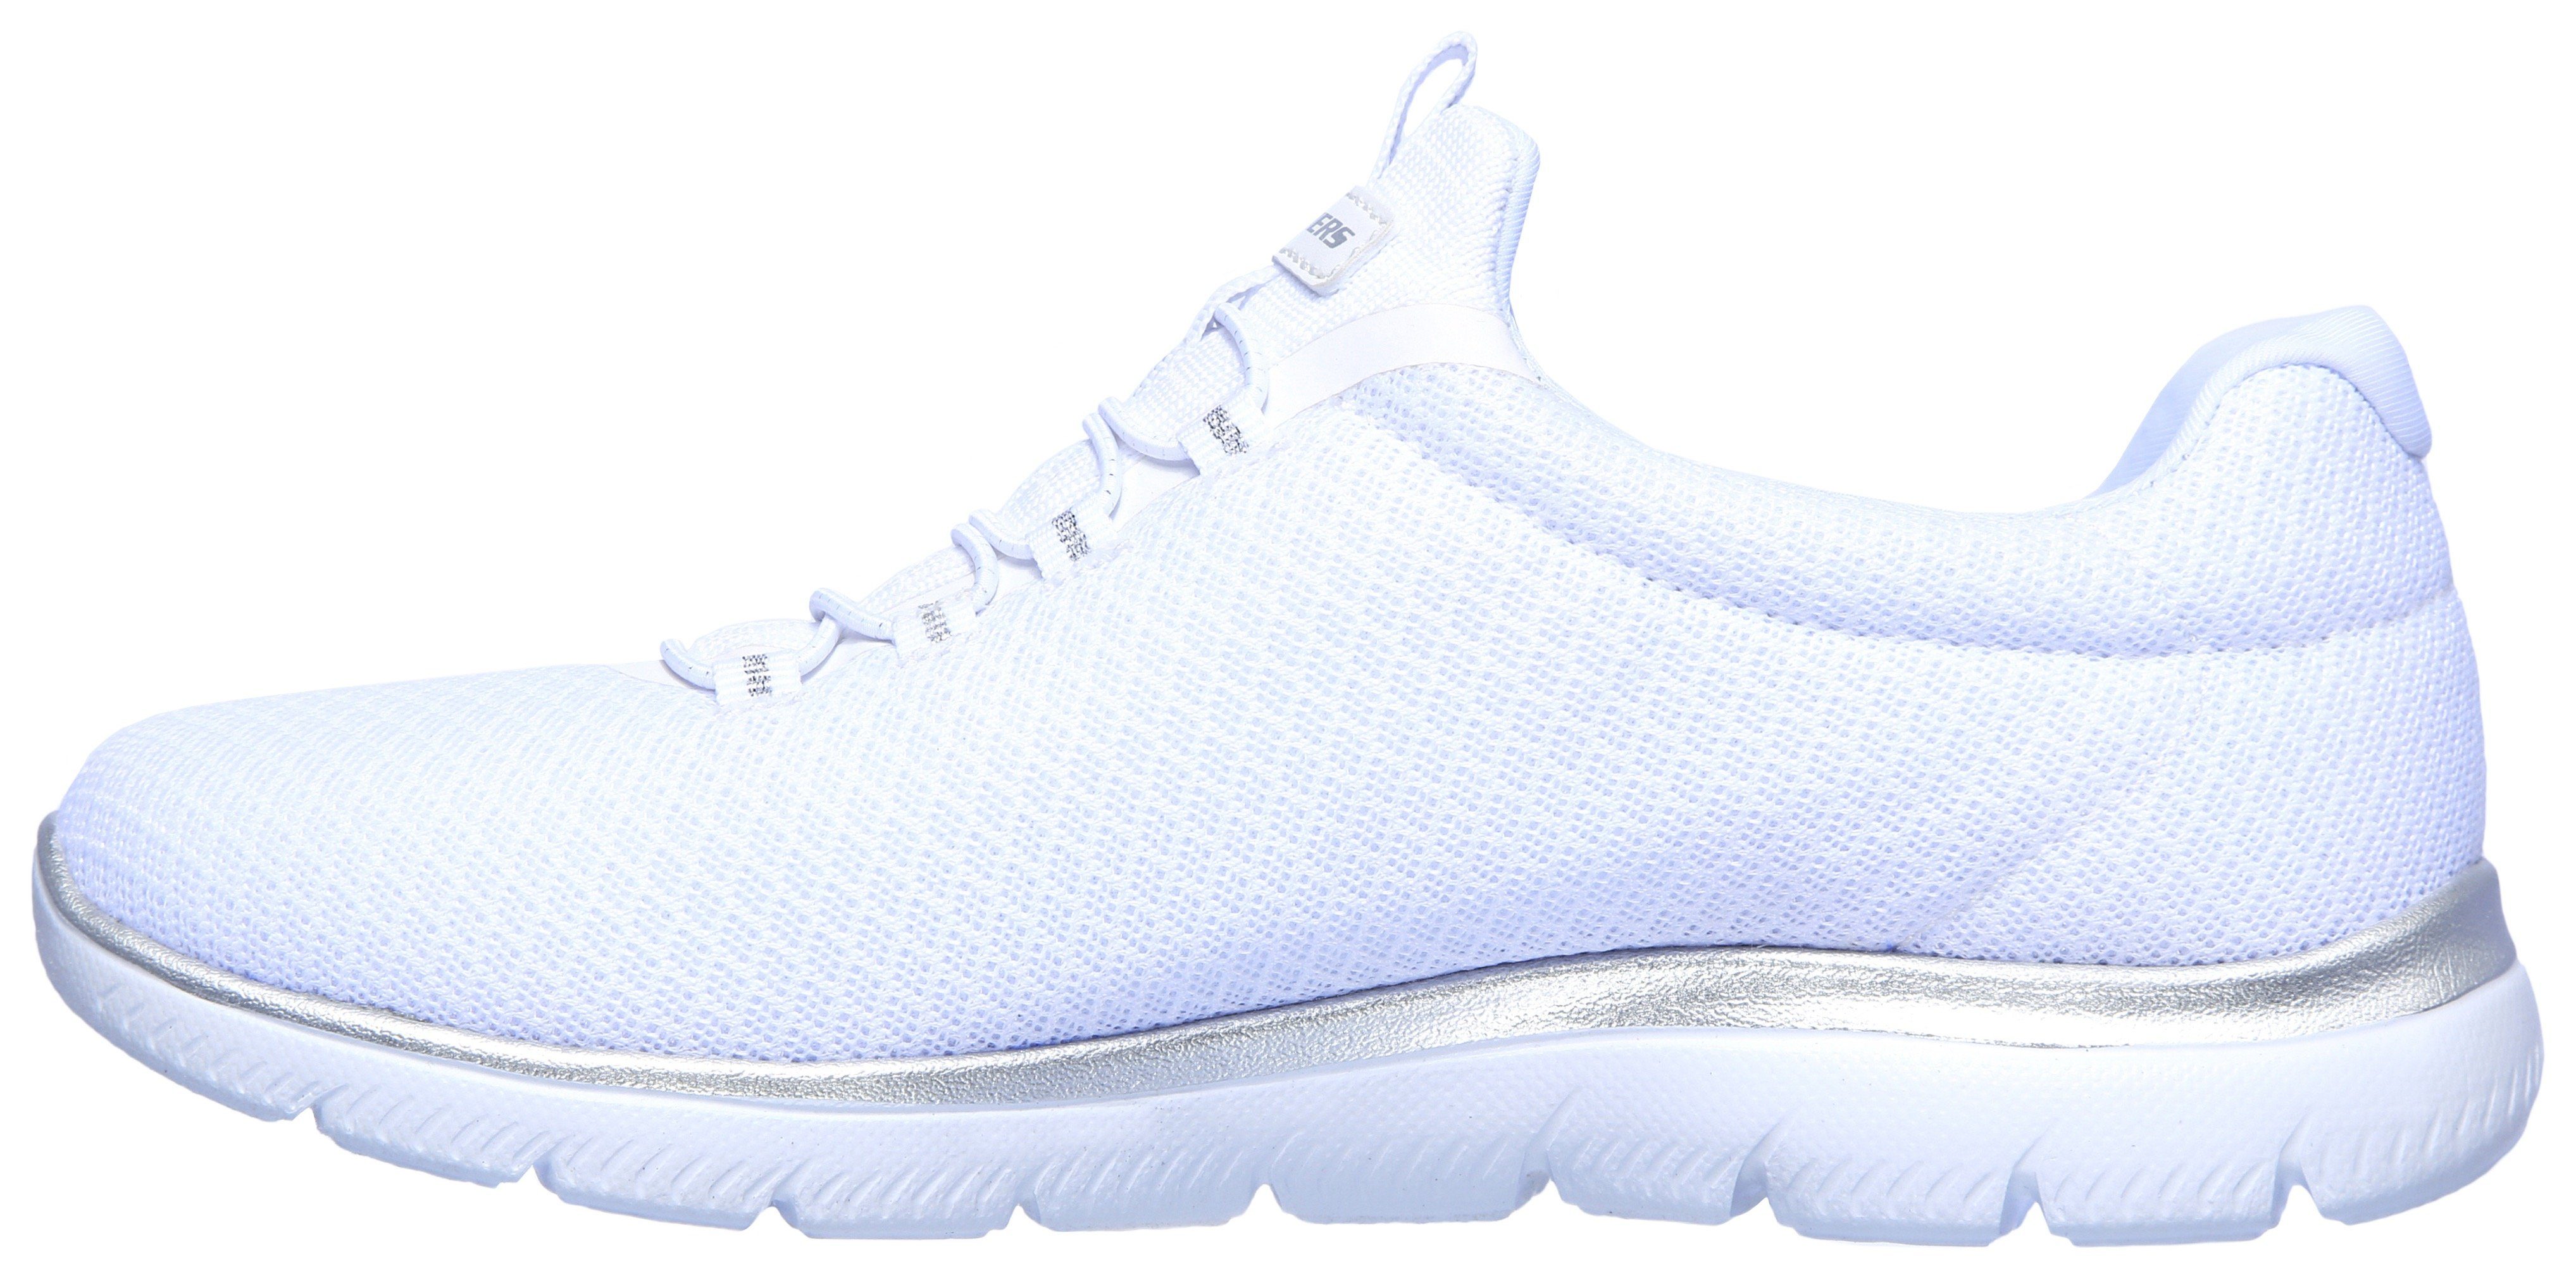 Skechers dezenten Slip-On SUMMITS Sneaker Kontrast-Details mit weiß-silberfarben